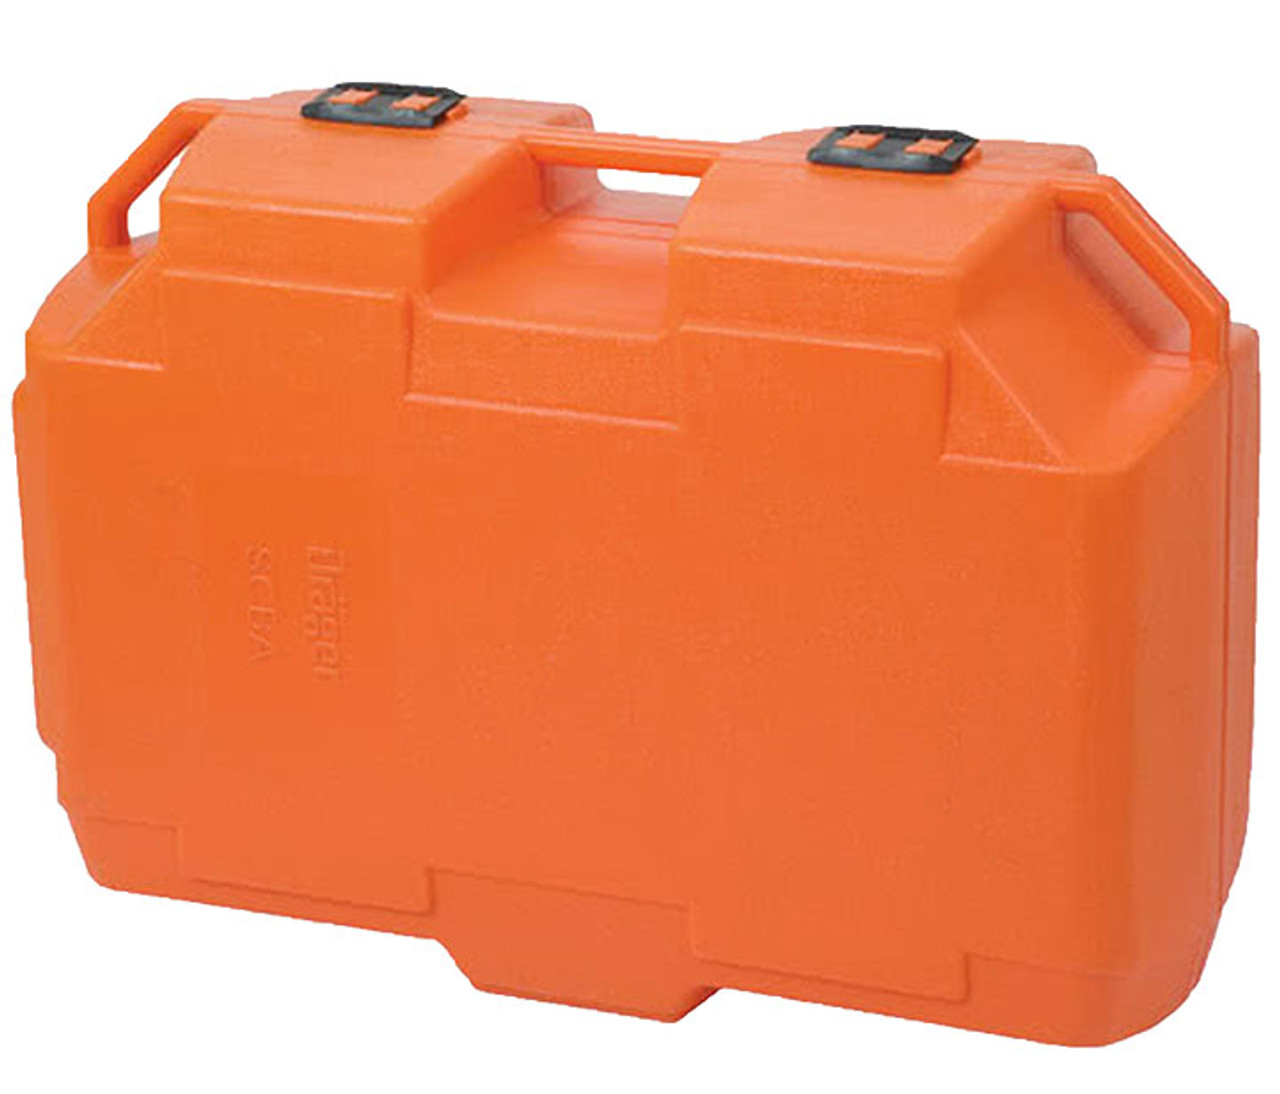 Dräger SCBA Rigid Orange Storage Case - FYR-TEK